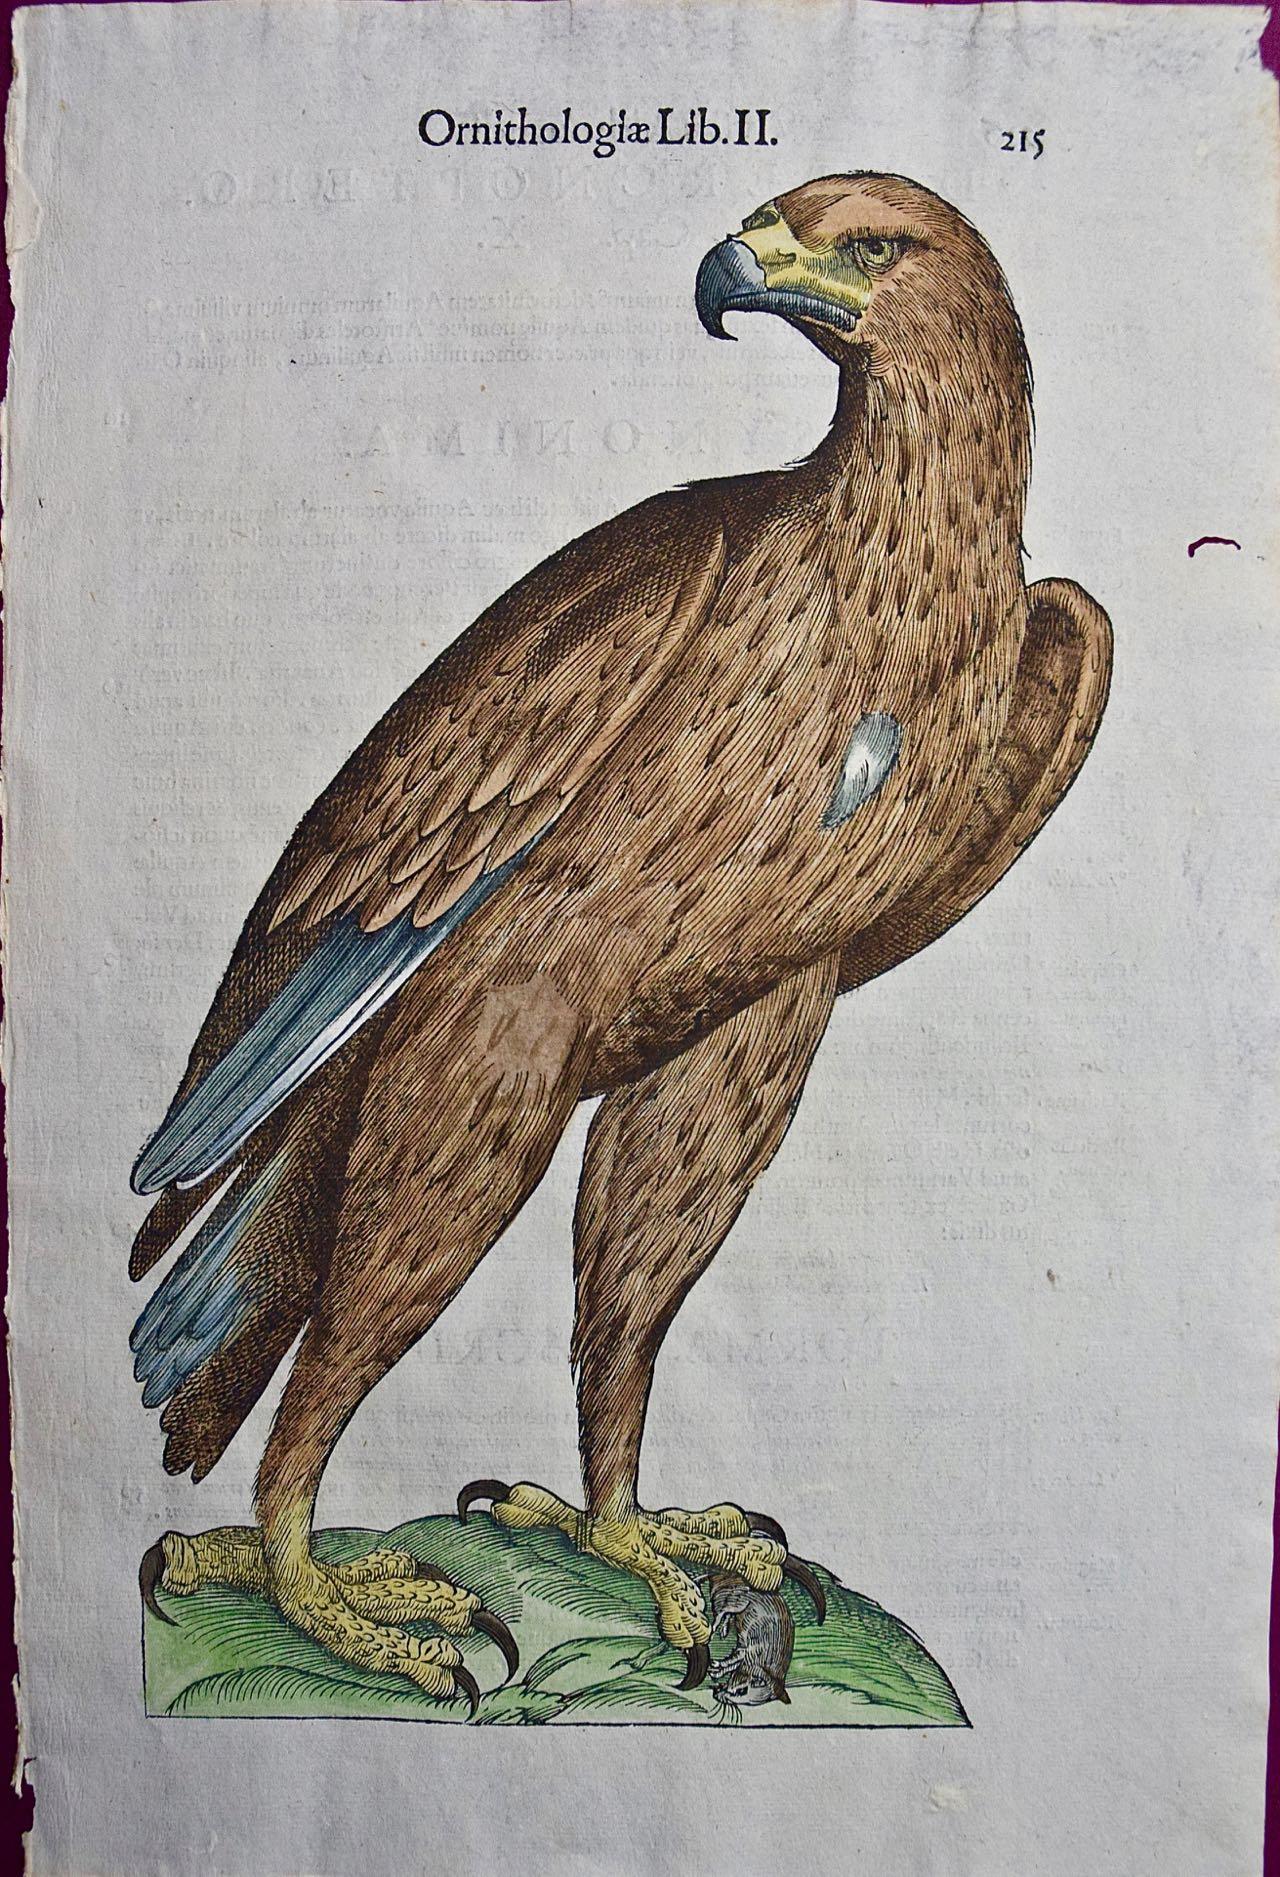 Ulisse Aldrovandi Landscape Print - Eagle: A 16th/17th Century Hand-colored Engraving by Aldrovandi